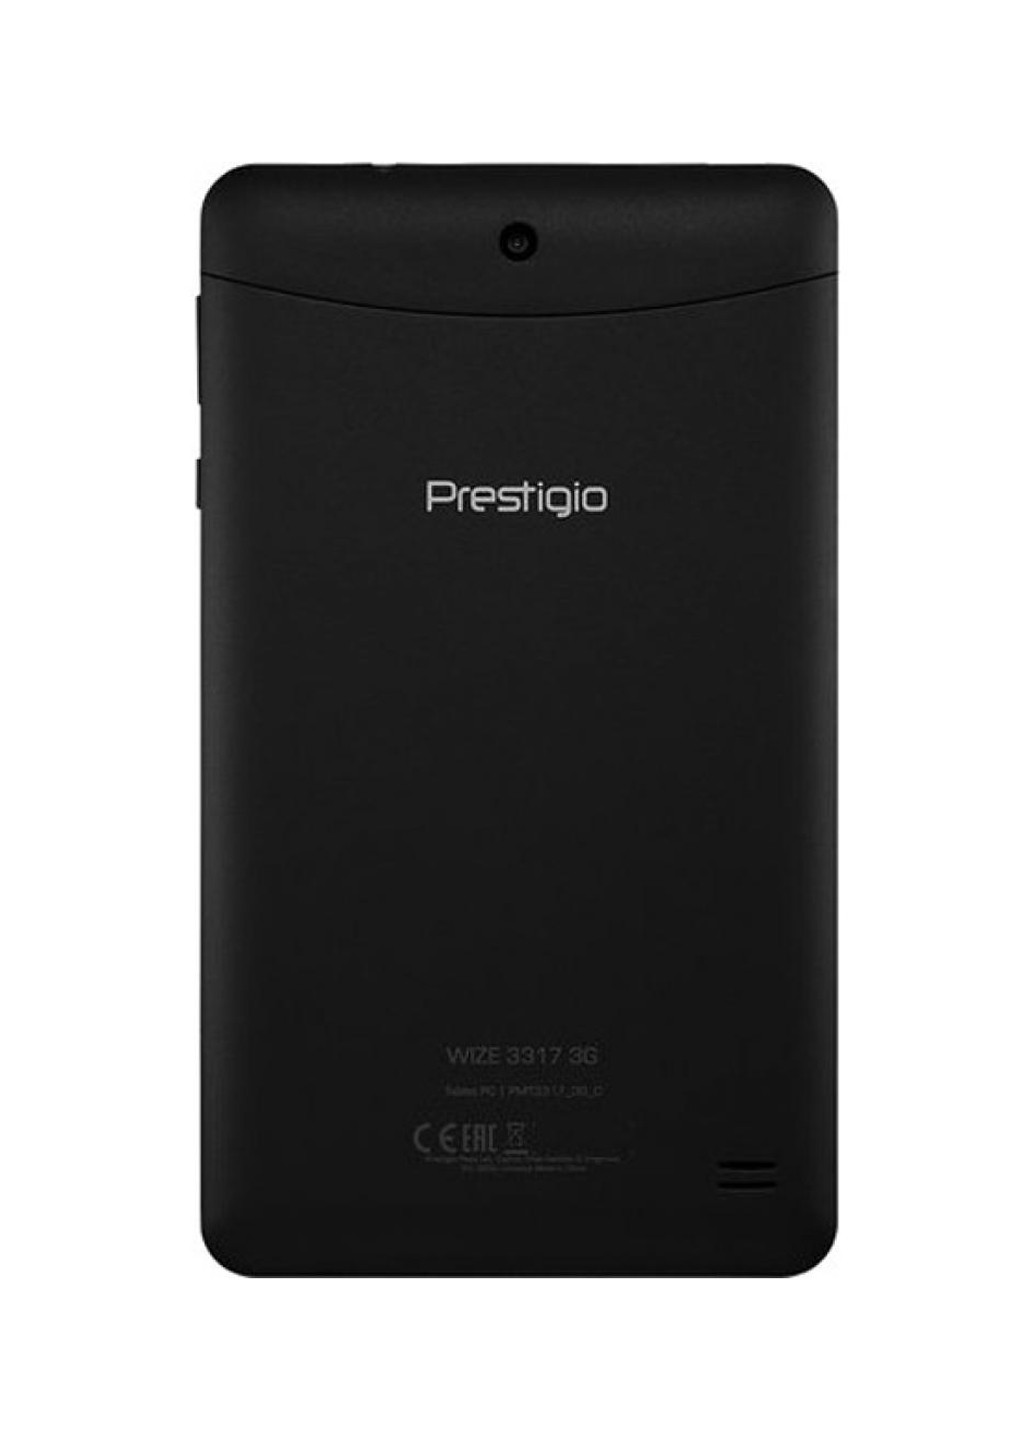 Планшет Wize 7 3G 8GB Black (PMT3317_3G_C) Prestigio wize 7" 3g 8gb black (pmt3317_3g_c) (131985152)